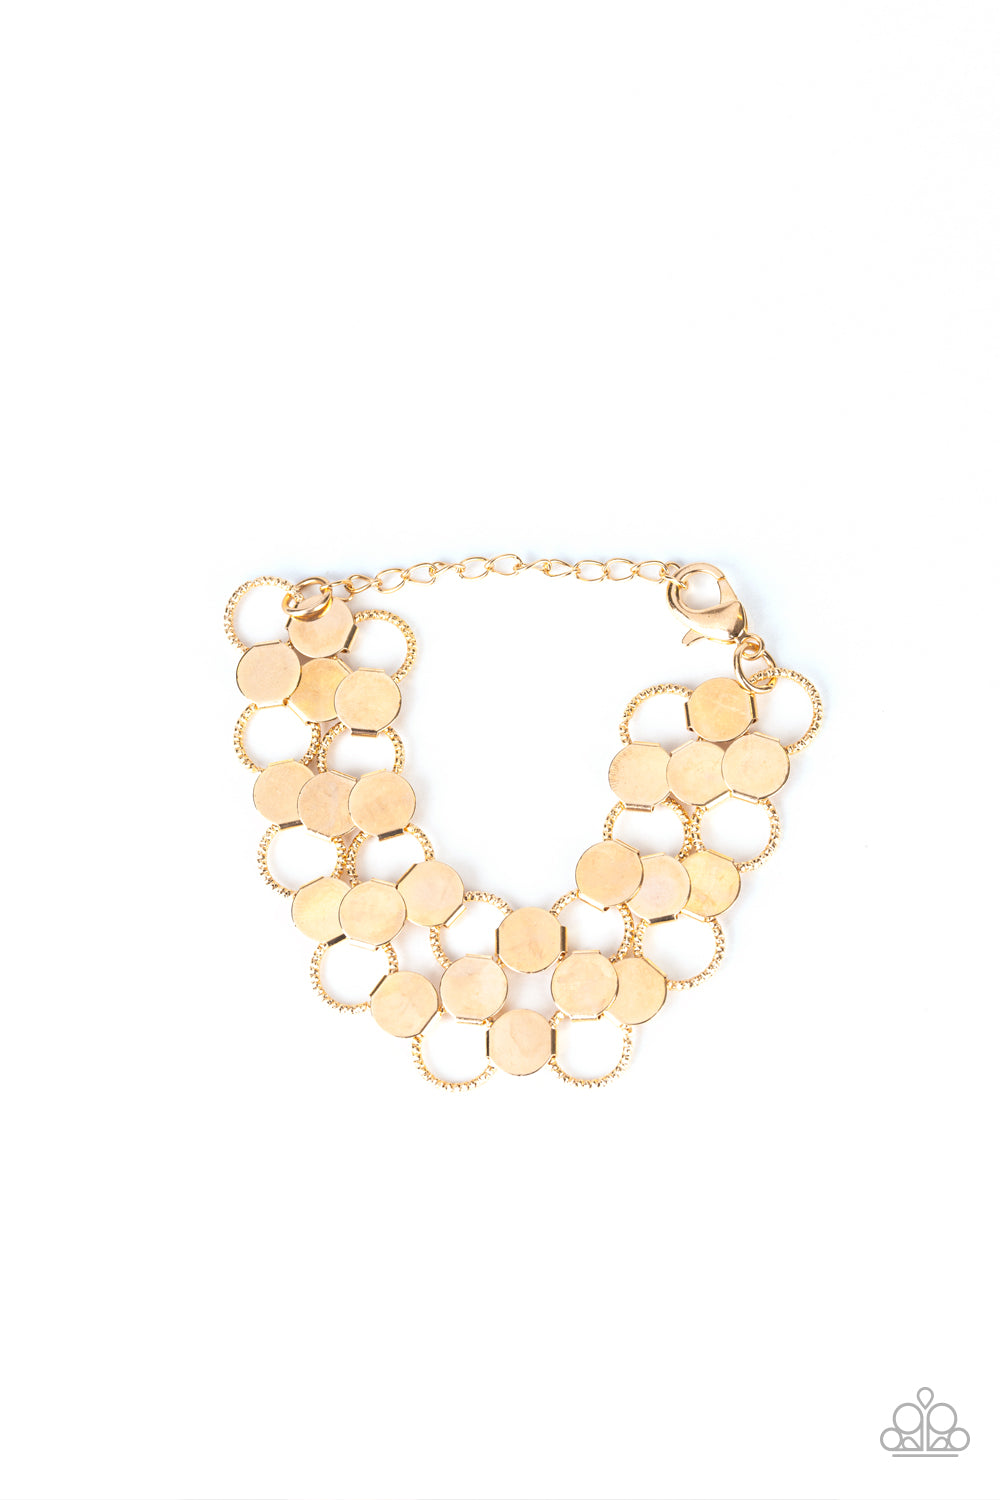 Net Result - Gold necklace w/ matching bracelet